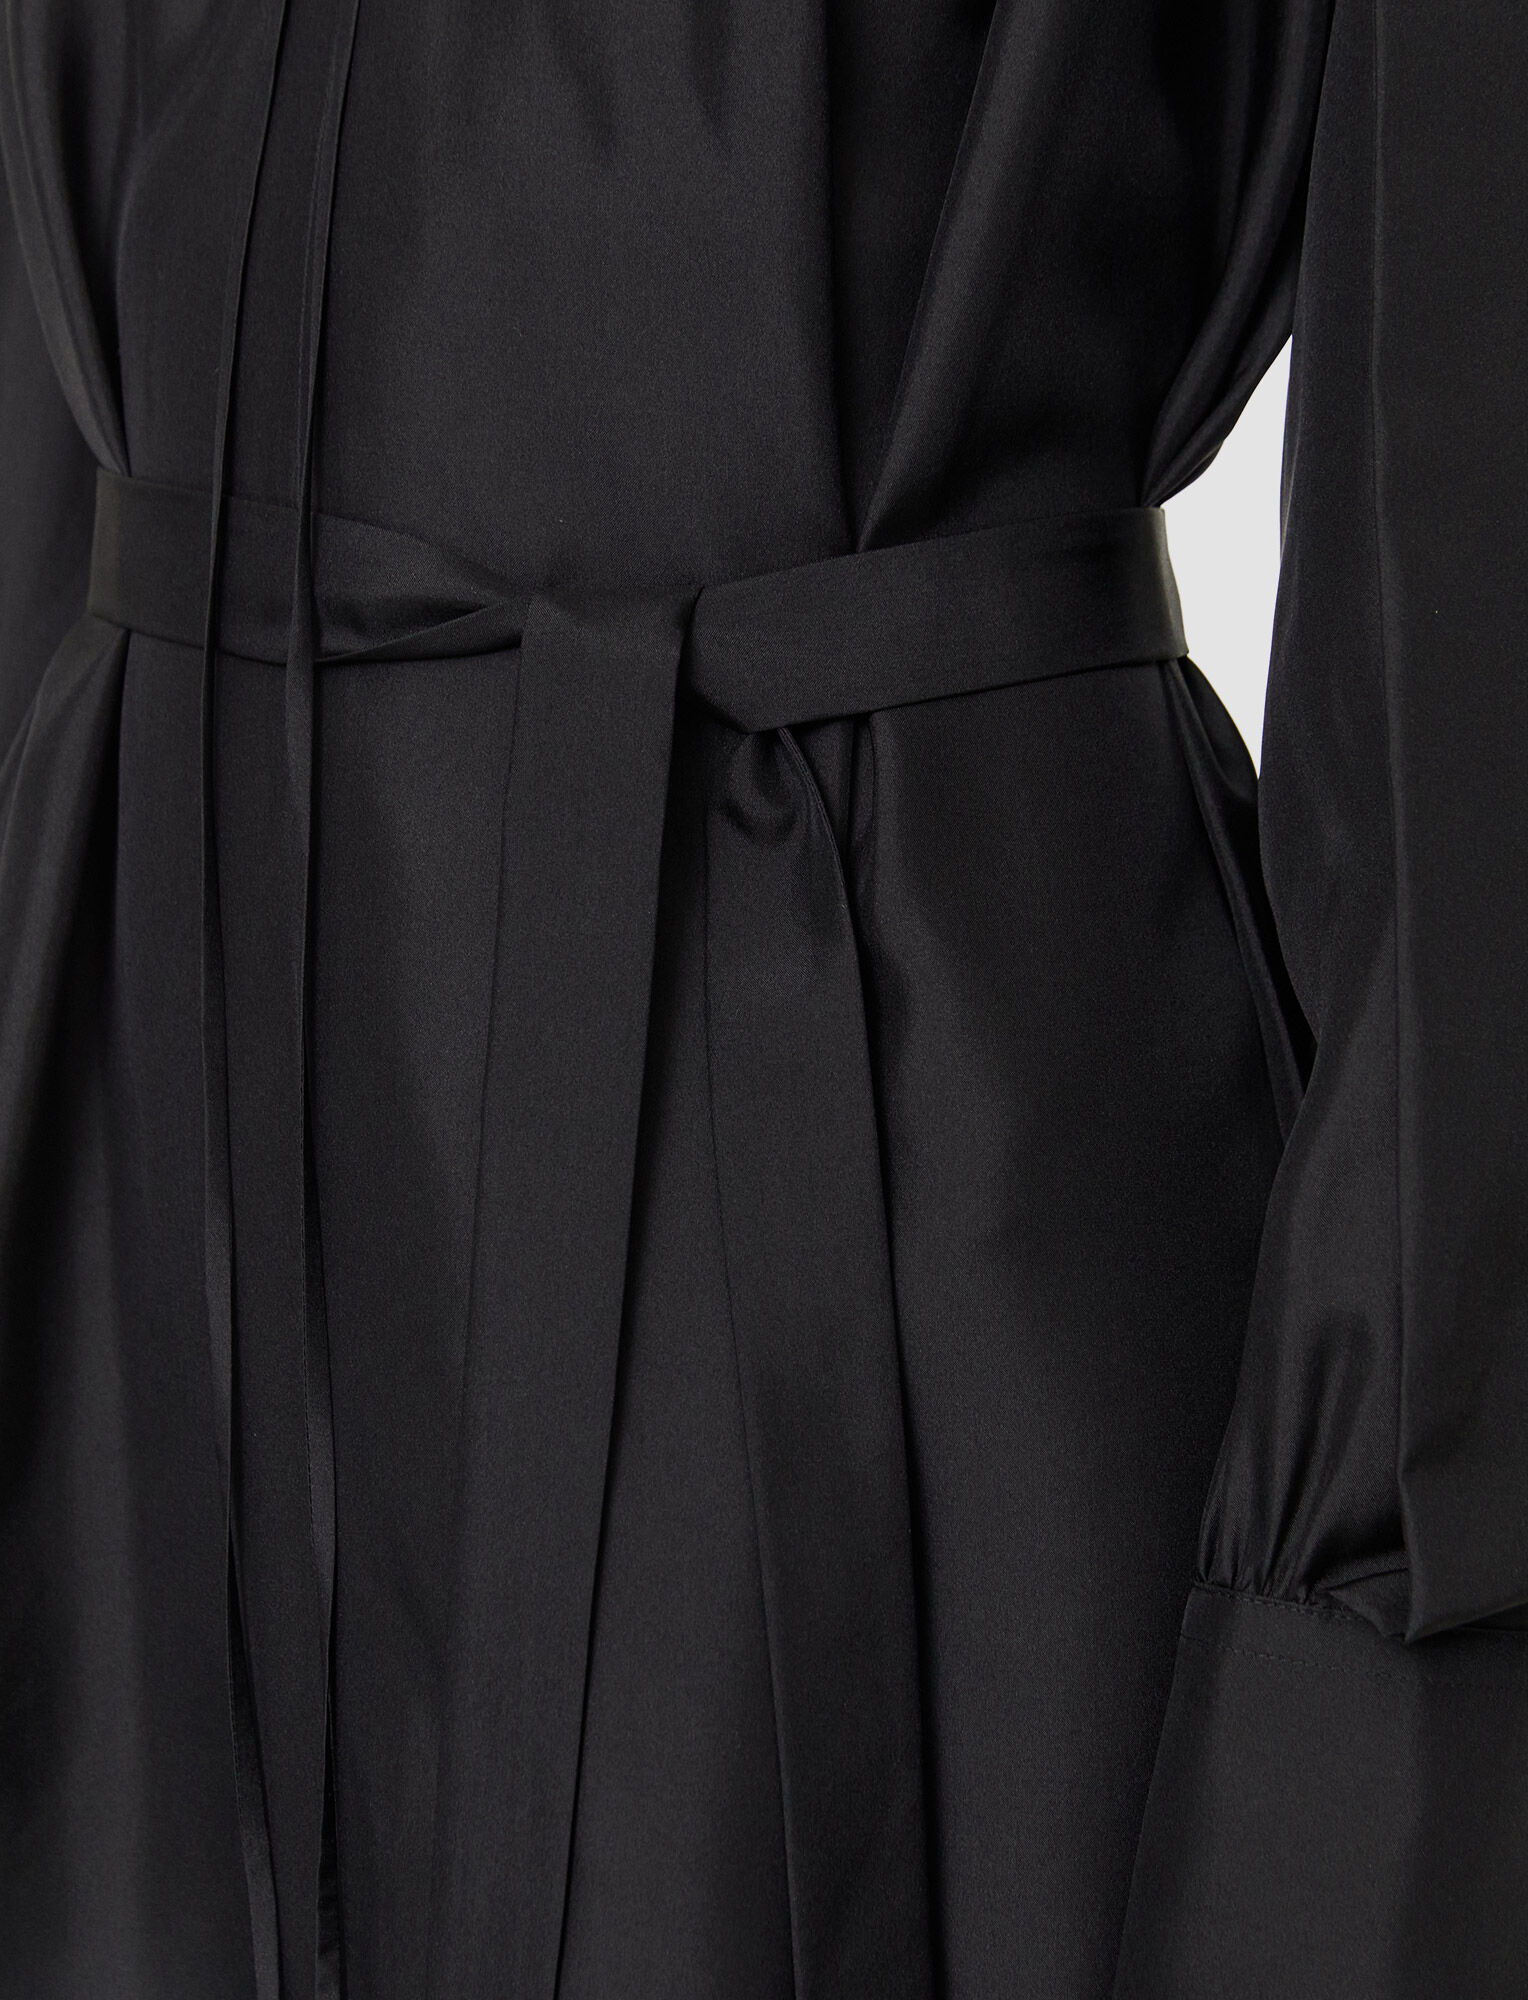 Joseph, Silk Habotai Dewar Dress, in Black